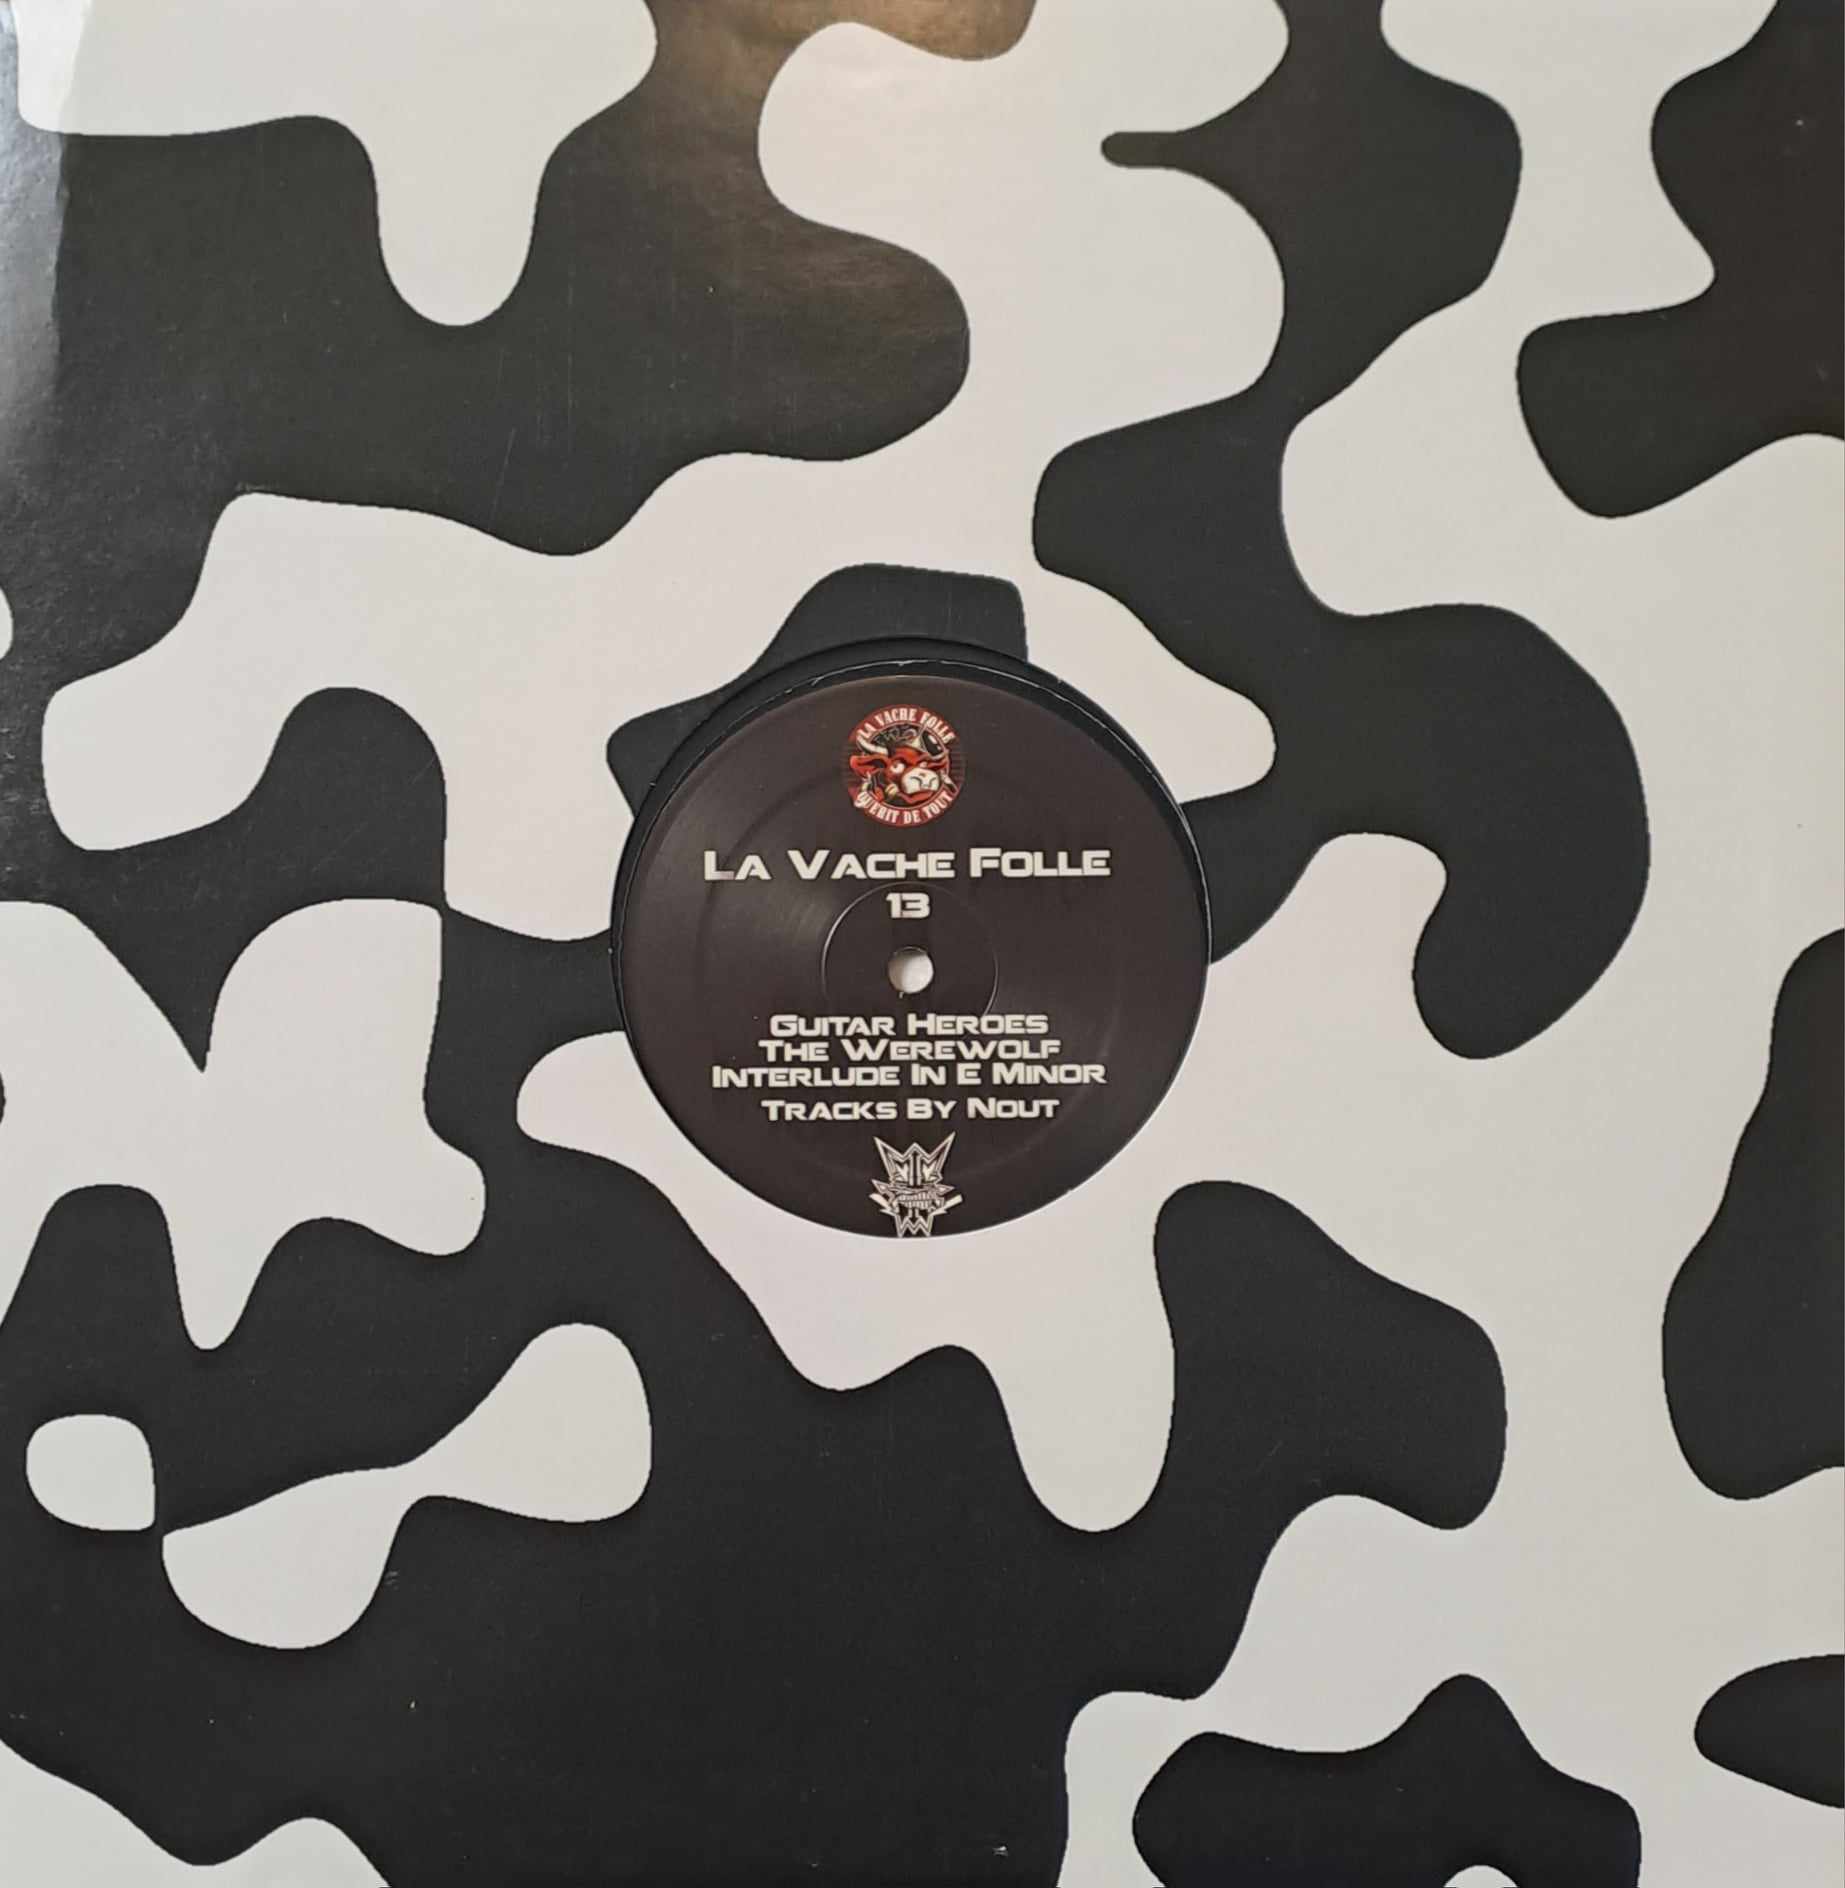 La Vache Folle 13 (original de 2018) - vinyle freetekno